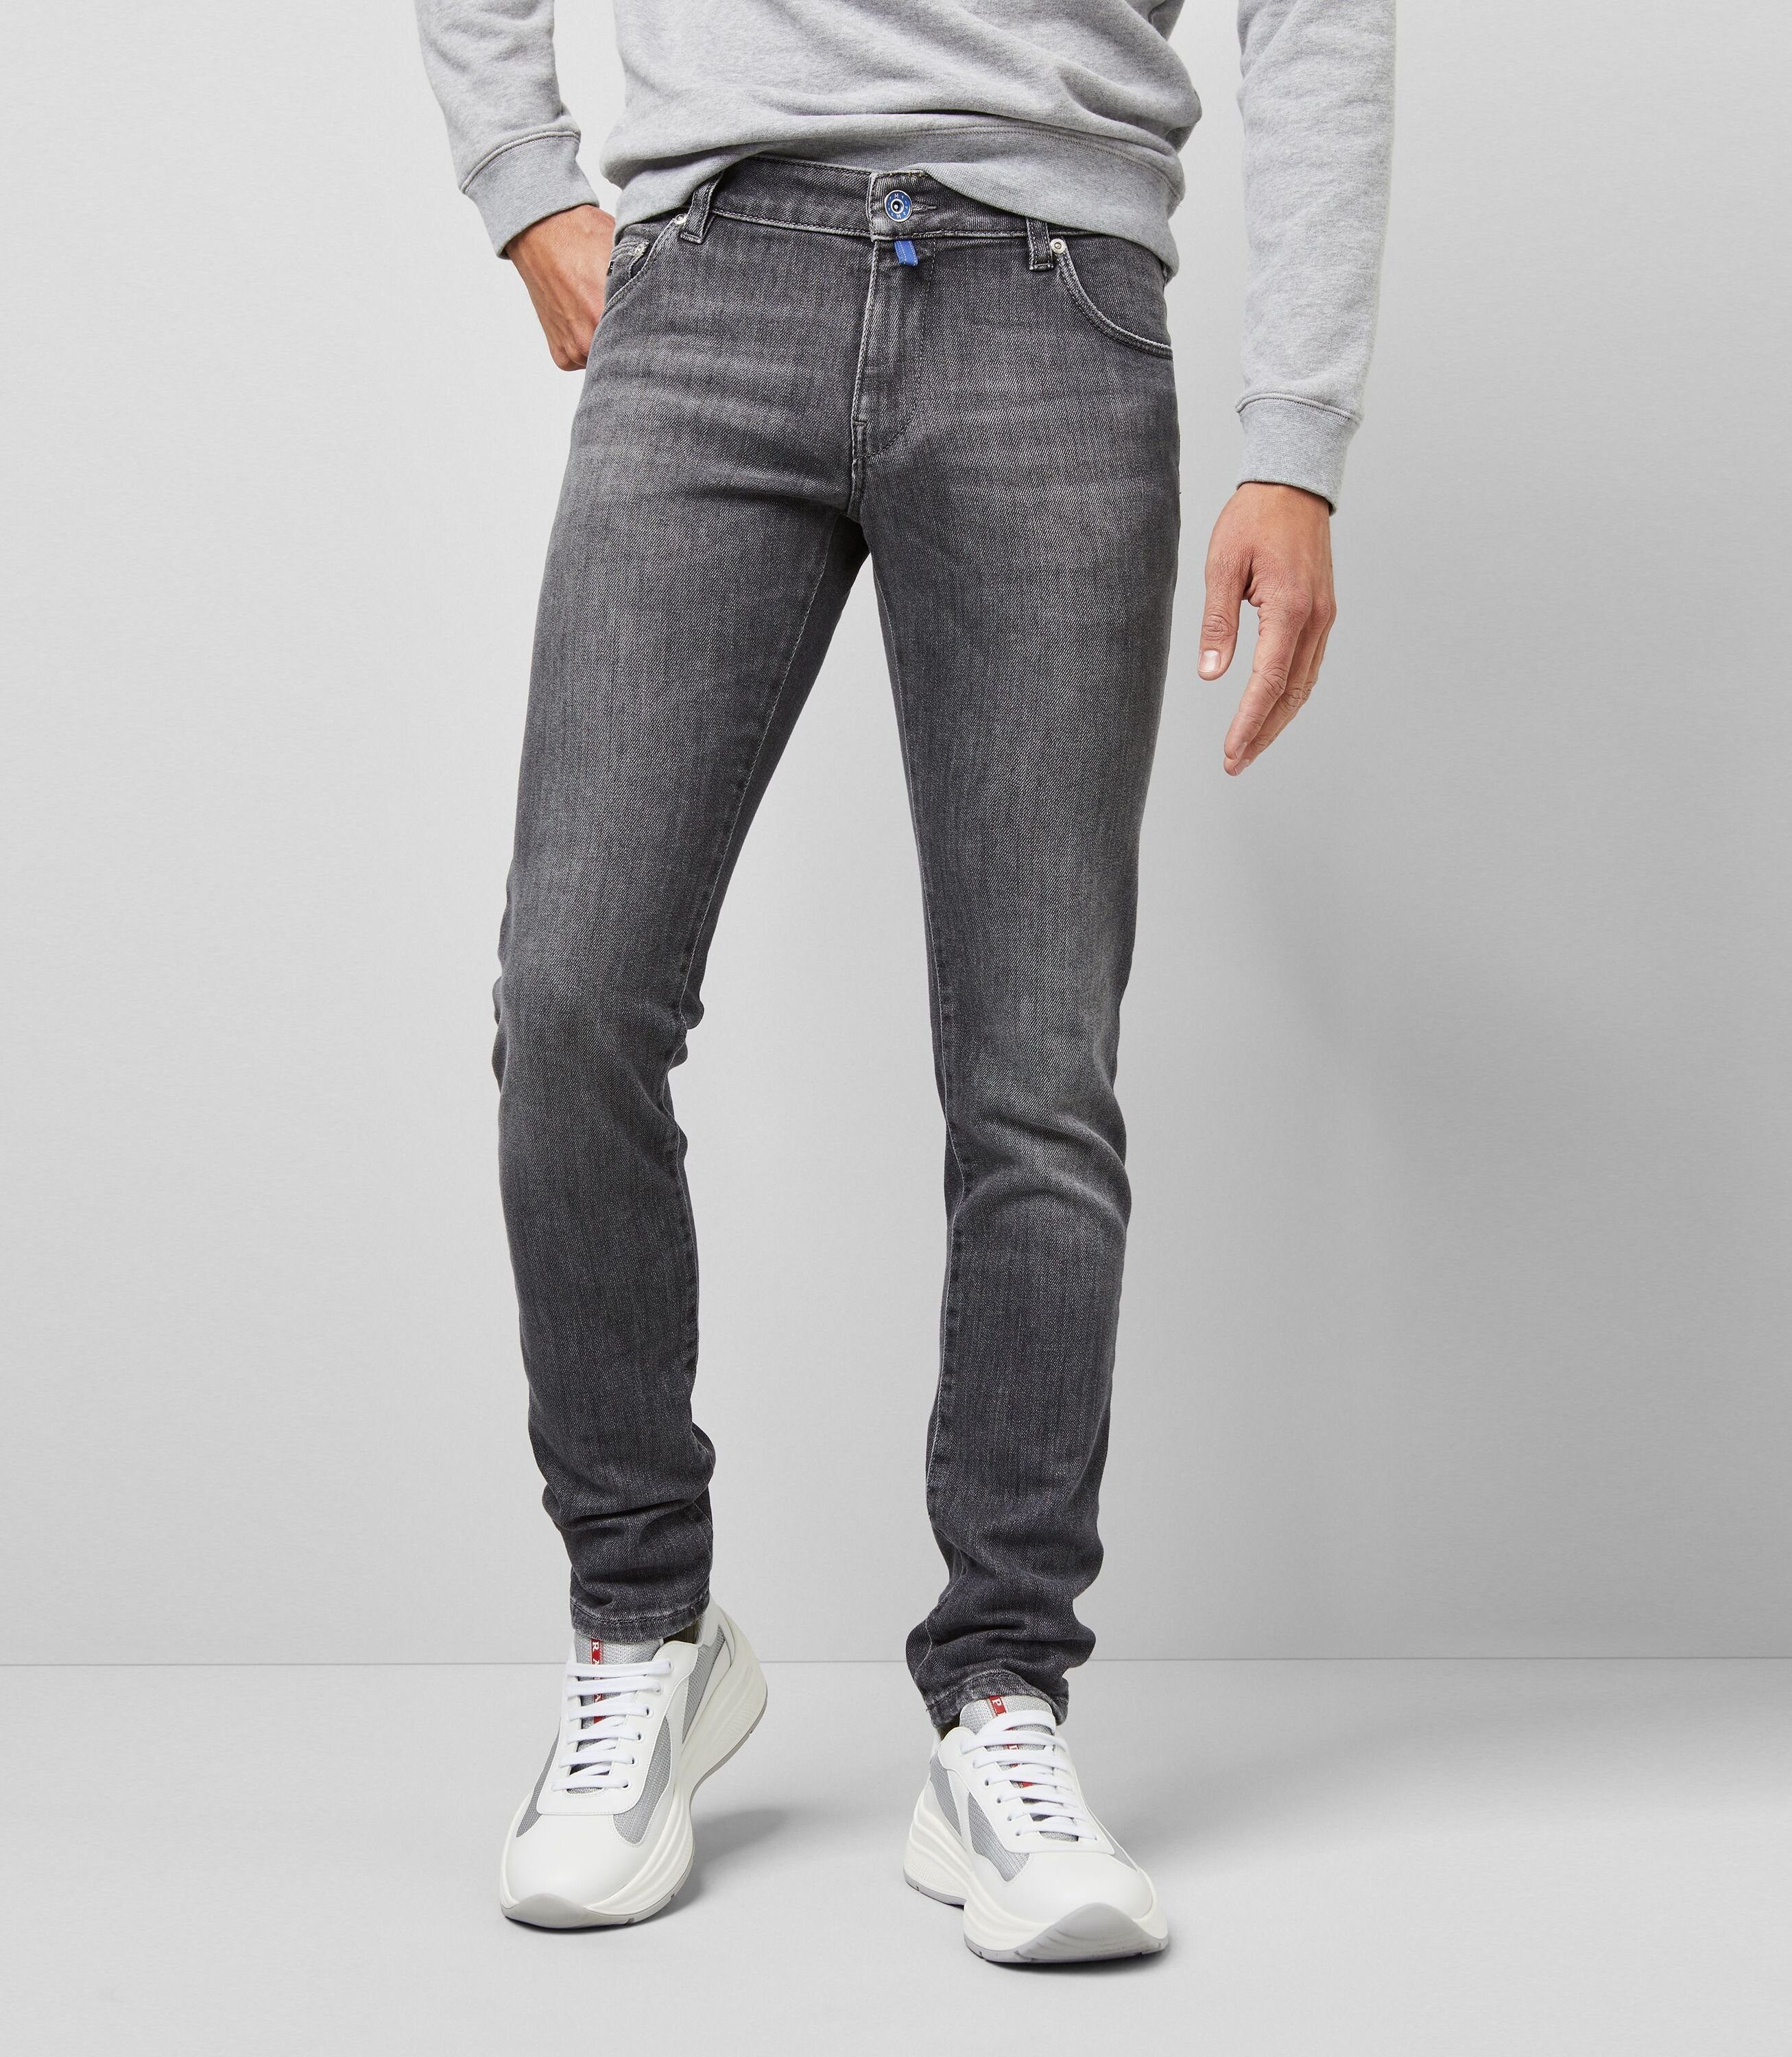 Super M5 schlanker Slim-fit-Jeans MEYER in Stretch Passform